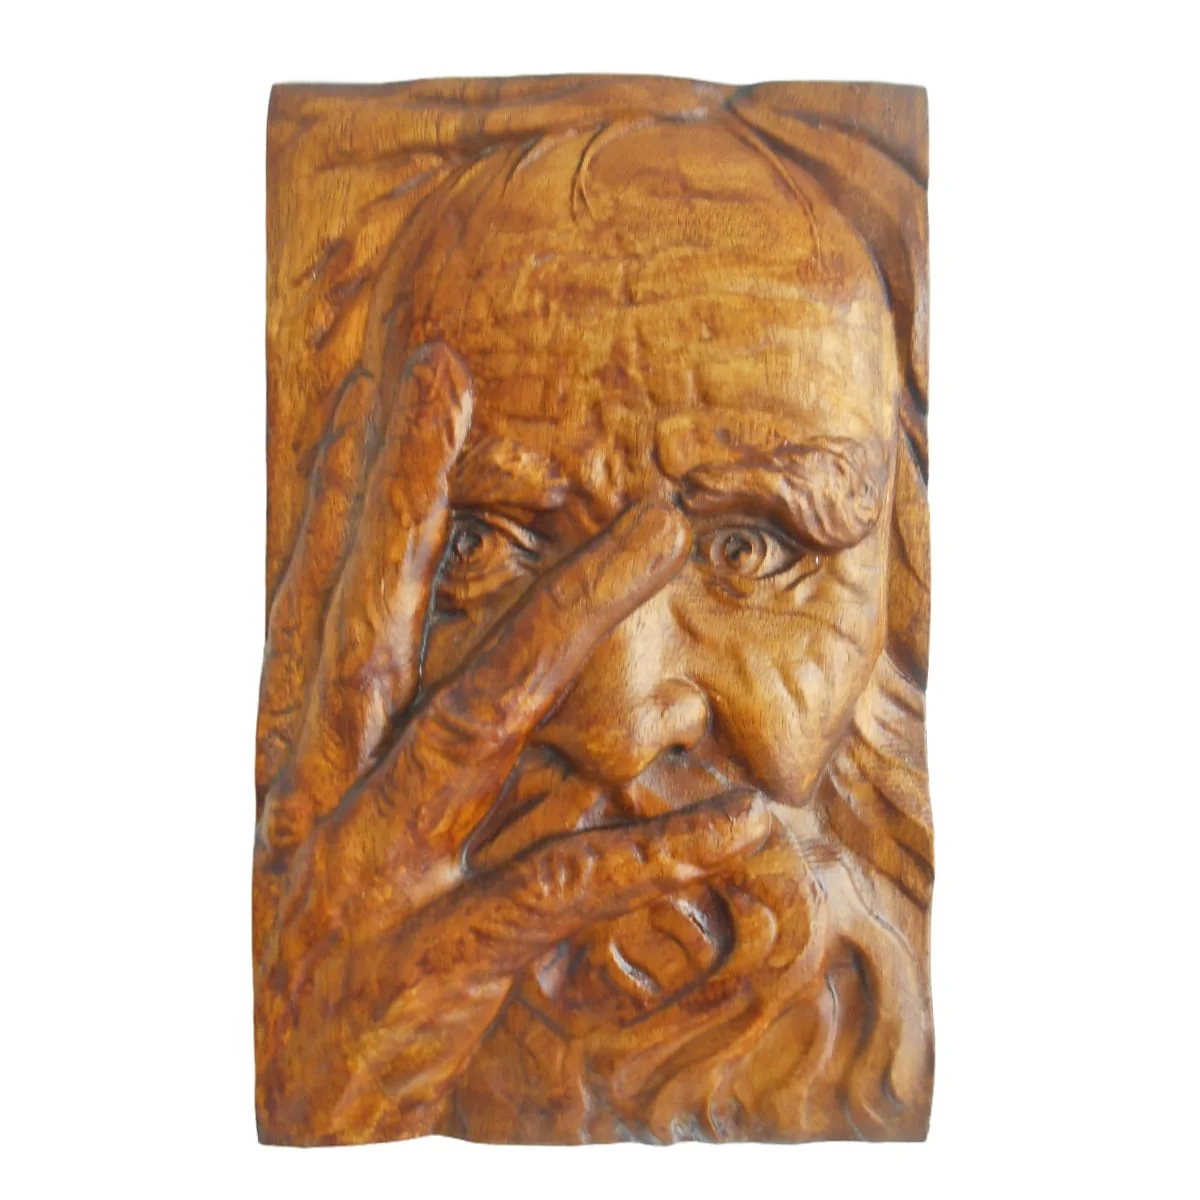 Old man Face Wood carving wall hanging Art decor long beard Bamunu face wood carved